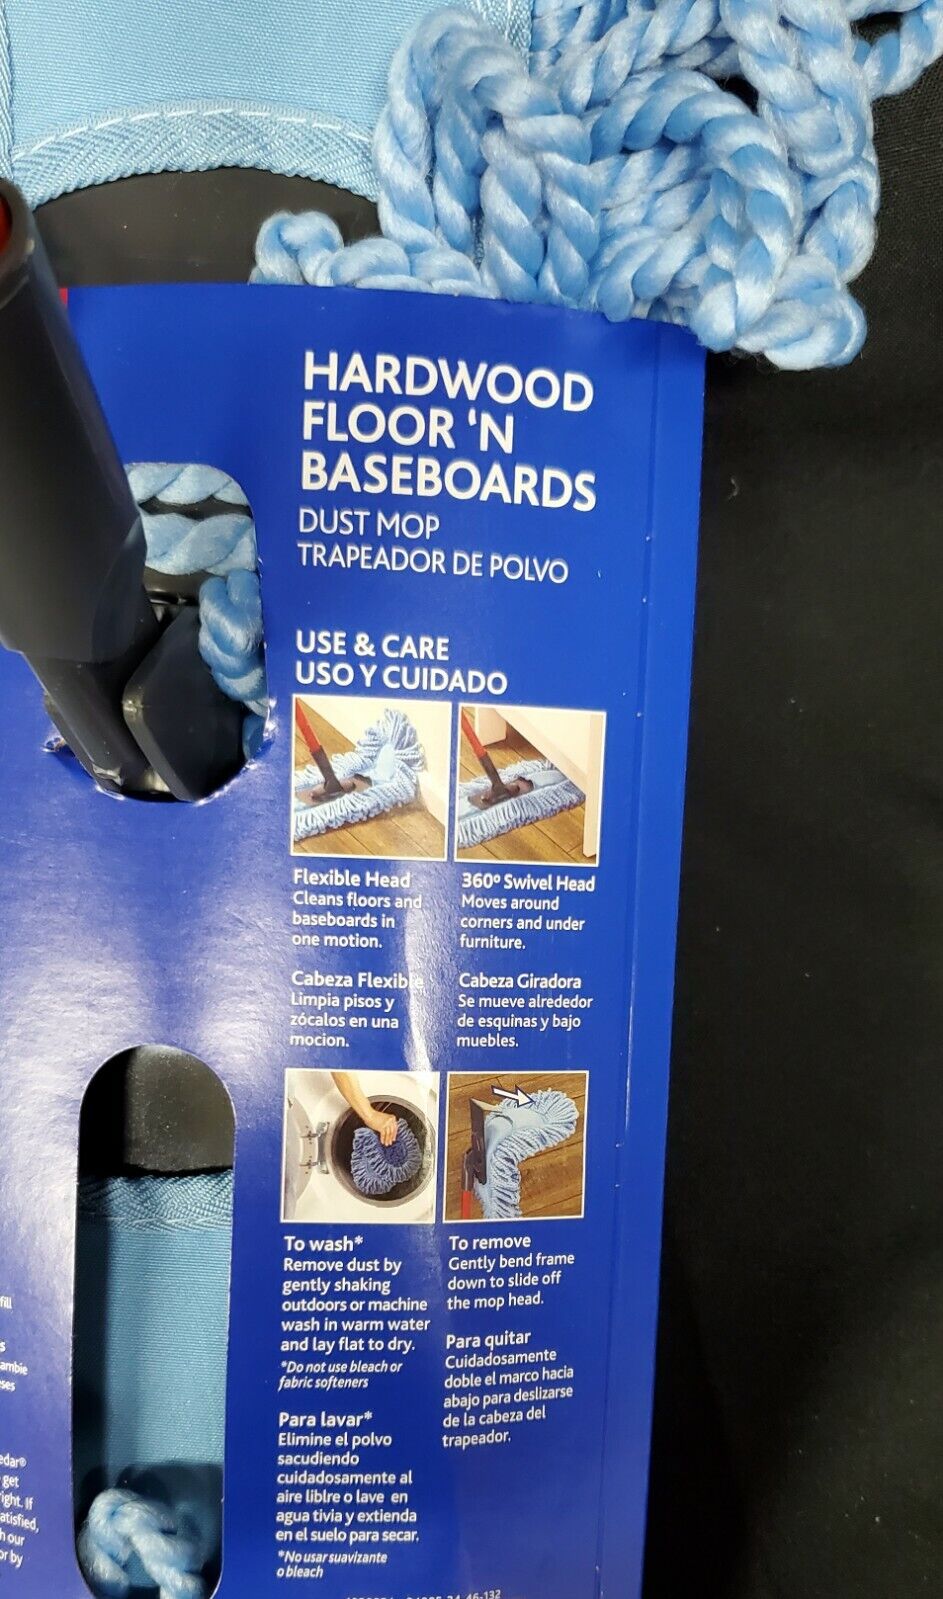 Hardwood Floor 'N Baseboards Dust Mop